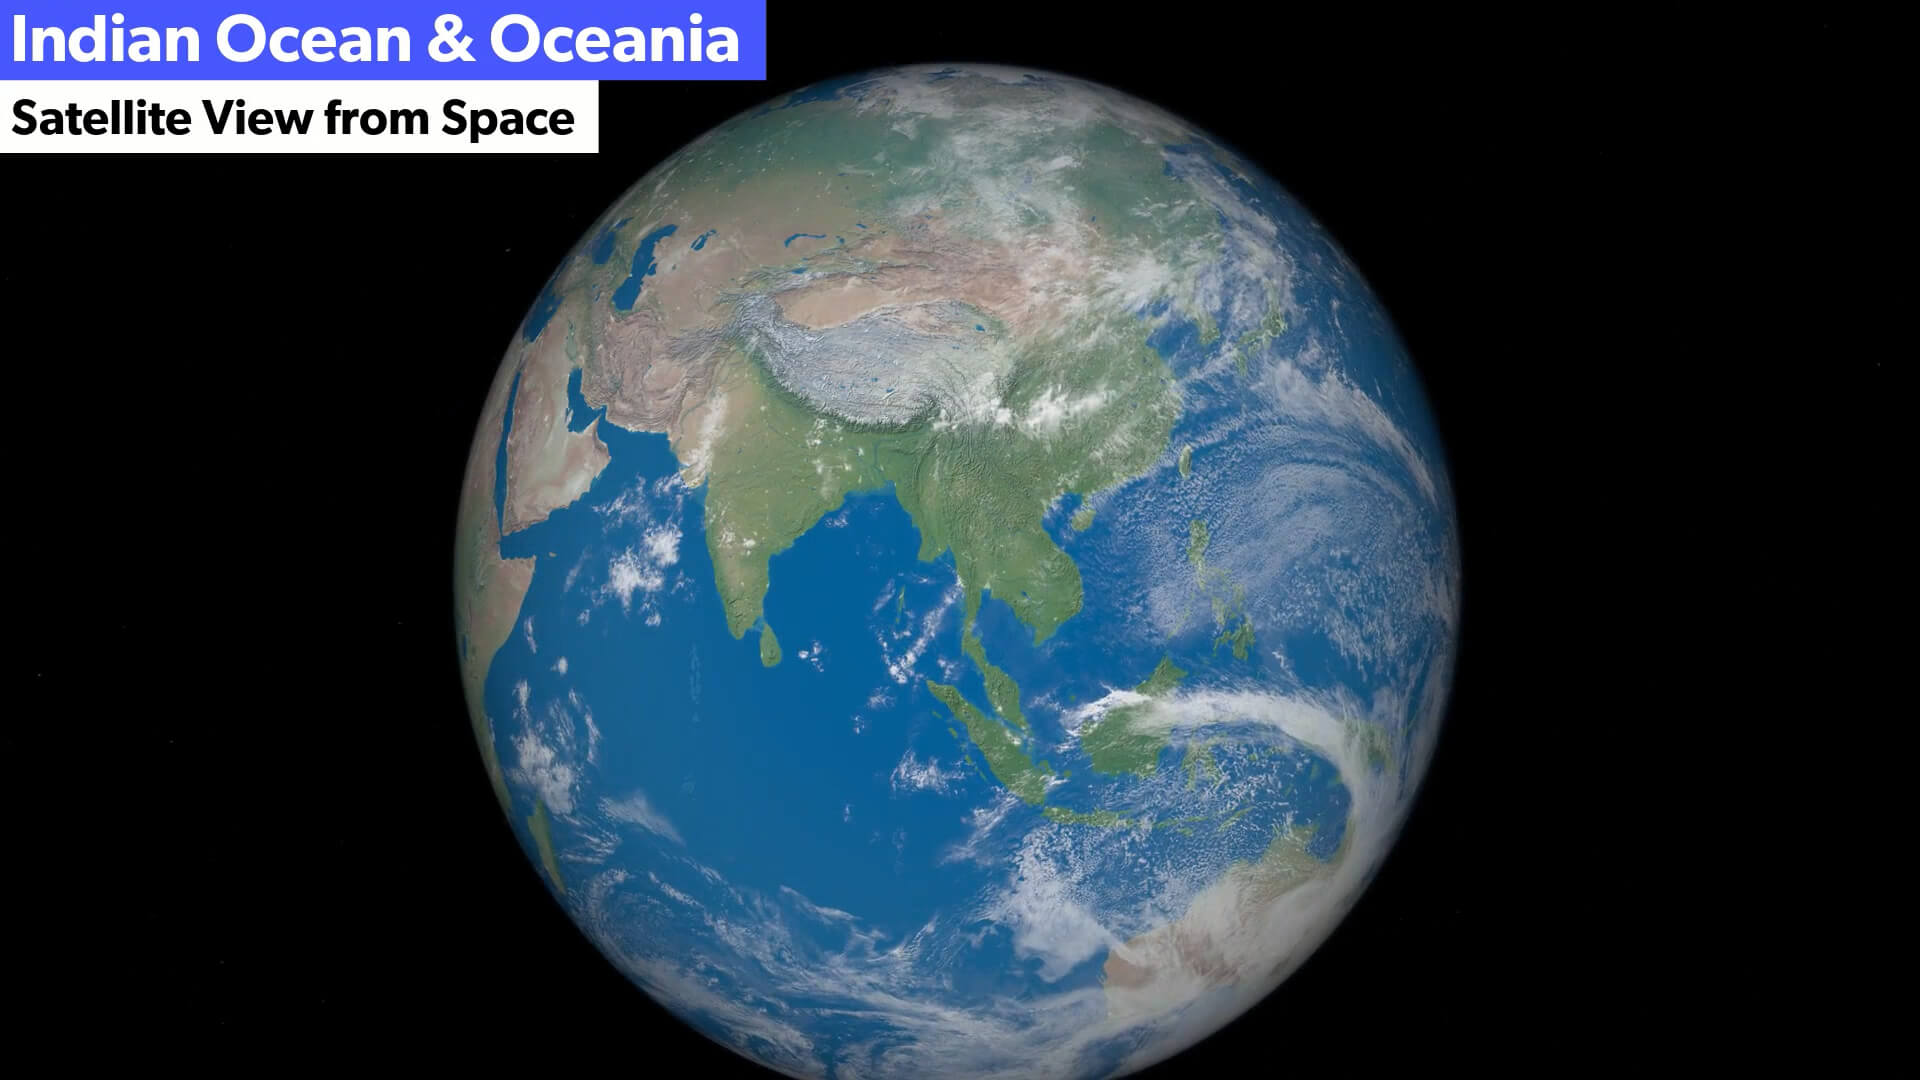 Indian Ocean and Oceania Satellite View